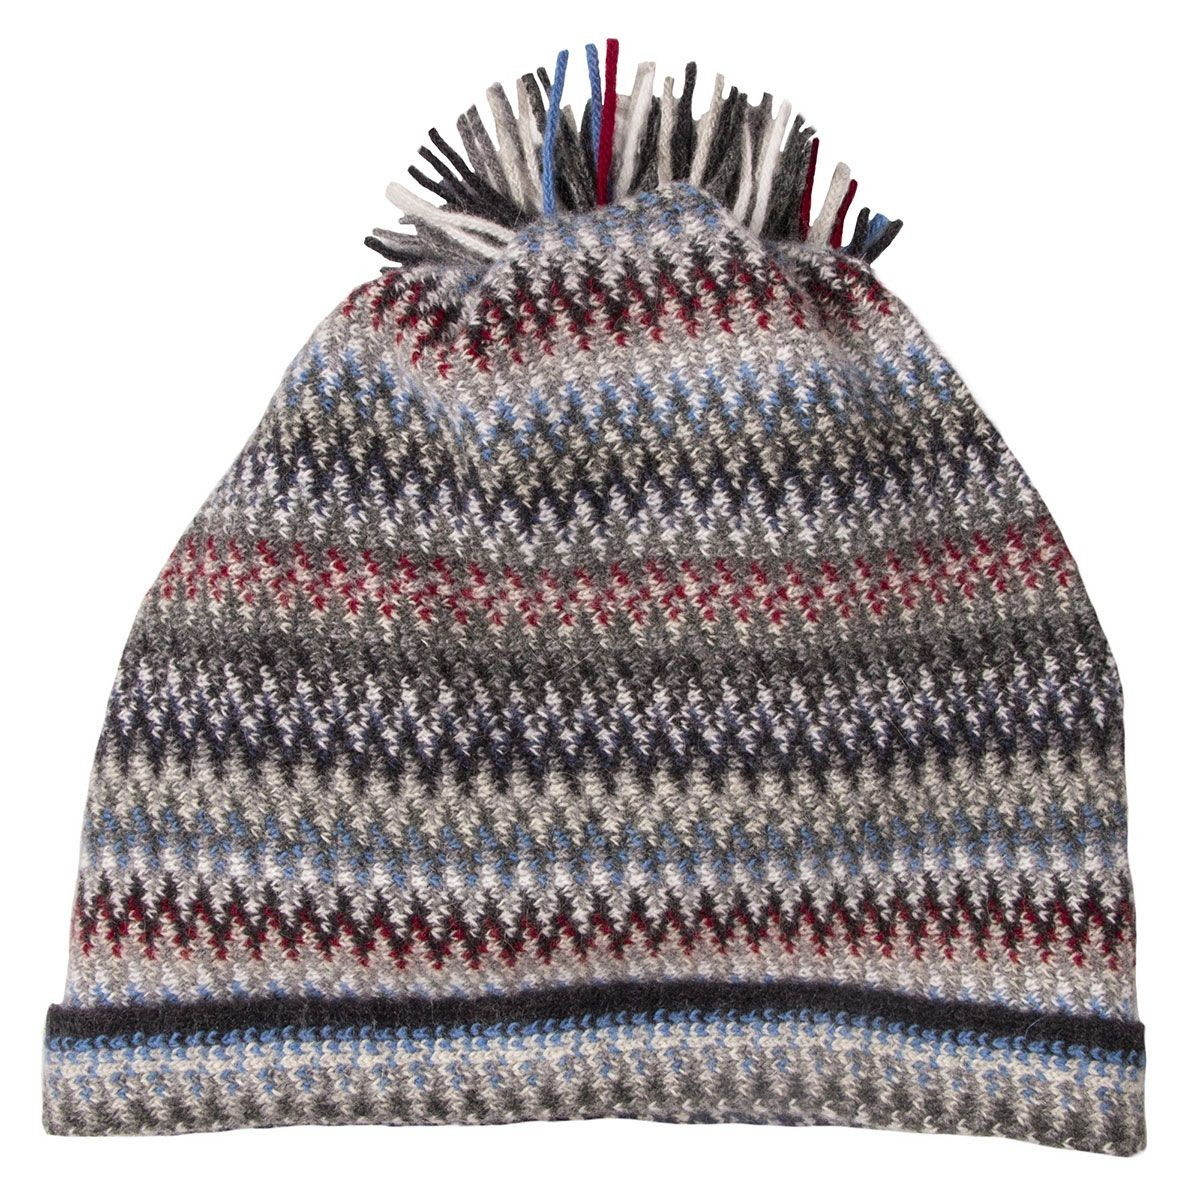 Knit Zig Zag Pattern Arctic Zig Zag Woolangora Knitted Hat